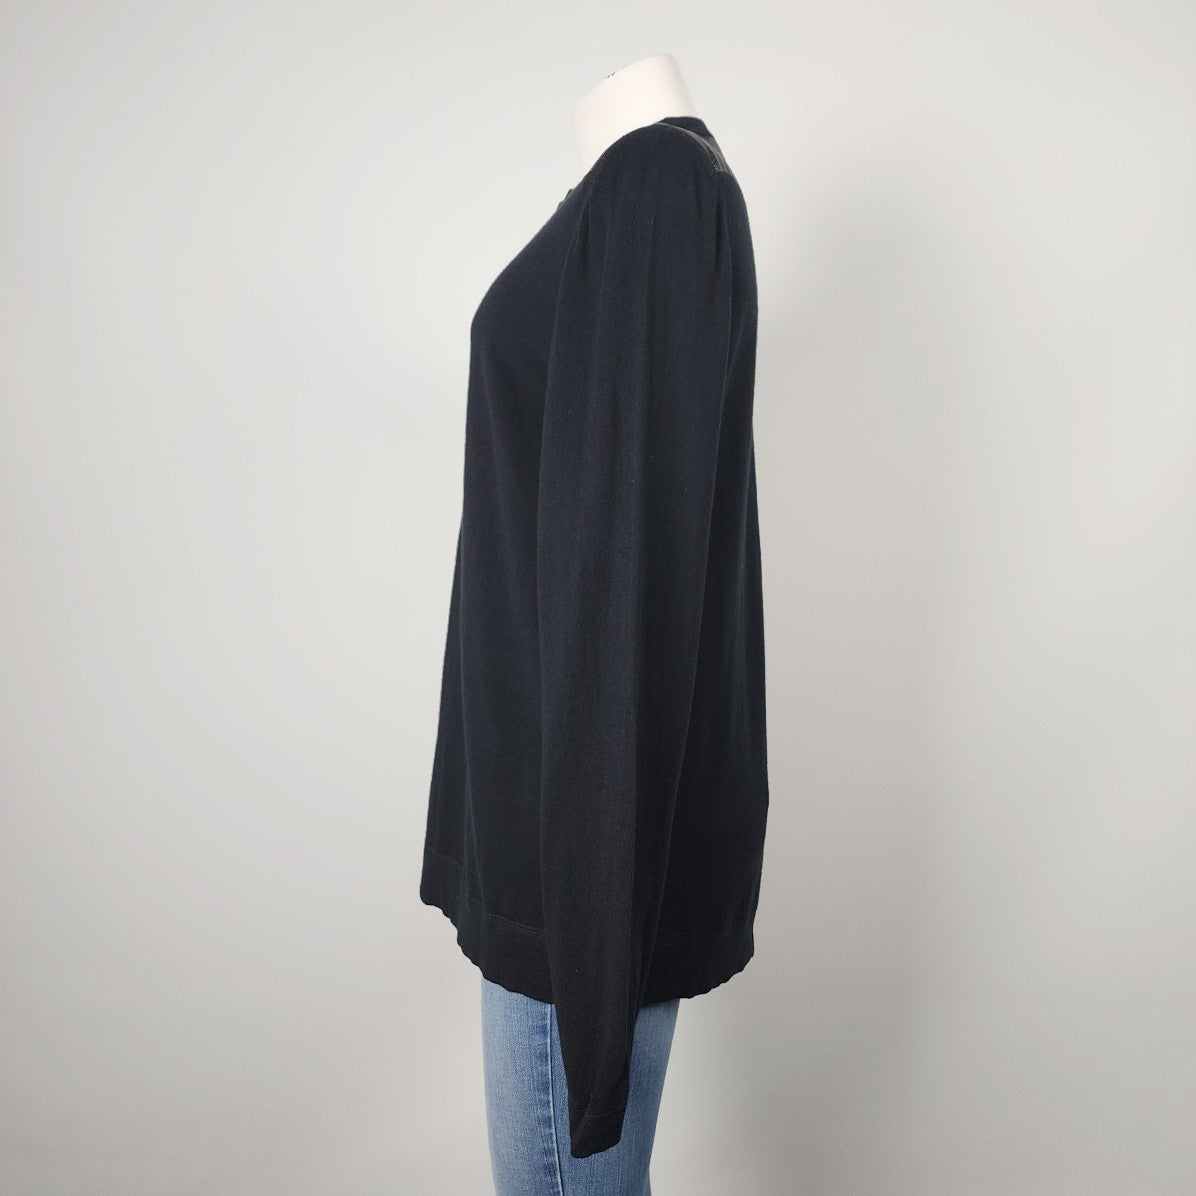 Hugo Boss Black Cotton Silk Cashmere Knit Sweater Size L/XL